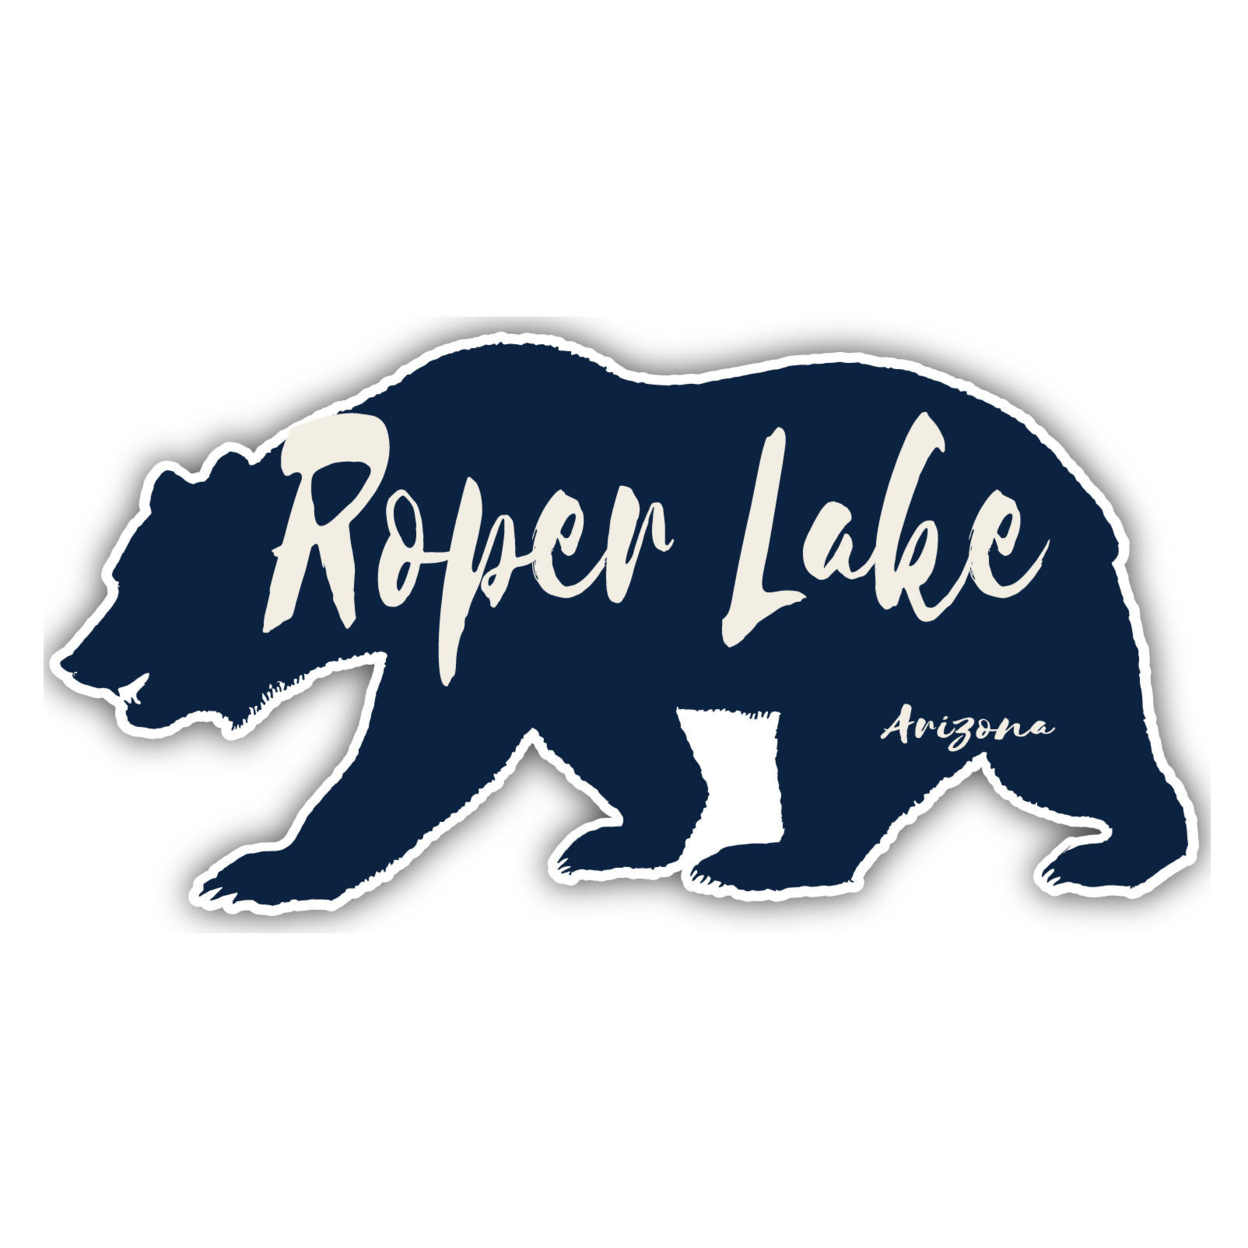 Roper Lake Arizona Souvenir Decorative Stickers (Choose Theme And Size) - Single Unit, 4-Inch, Tent